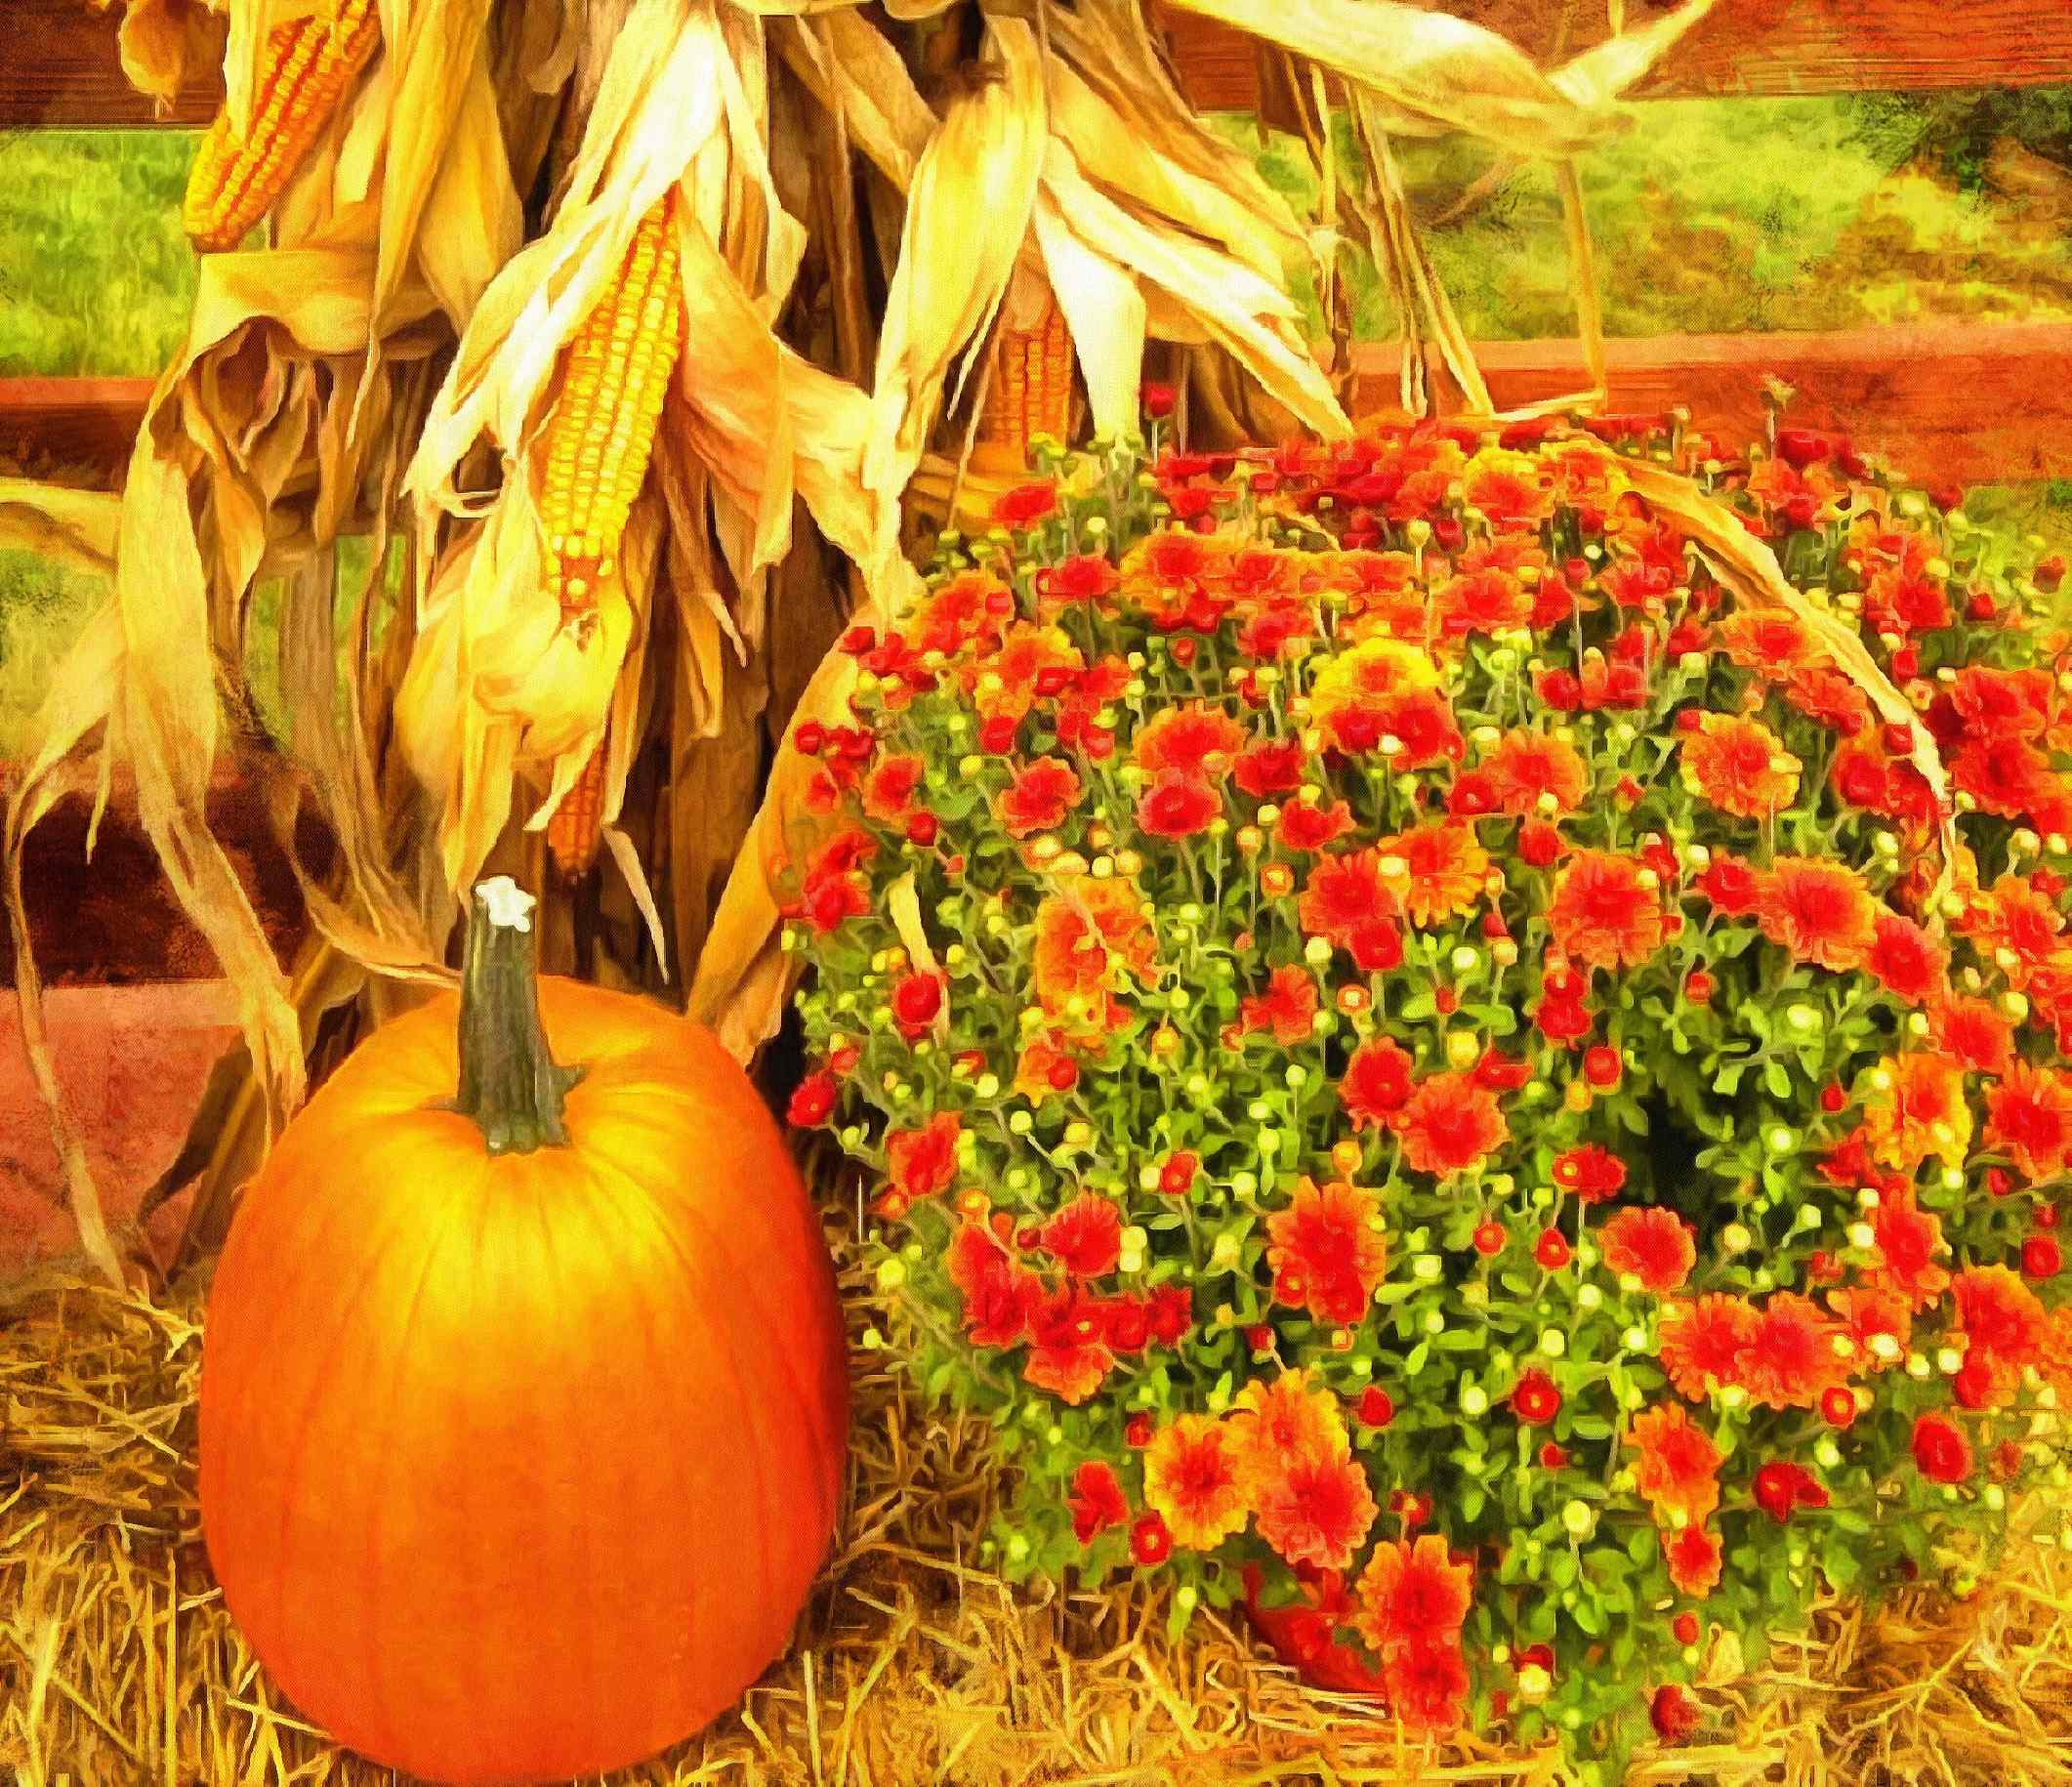 thanksgiving pumpkins,  ripe, crop, pumpkins,  pumpkin, yield, vegetables, holiday,  - thanksgiving, stock free image, public domain photos, free stock photo, download public domain images.